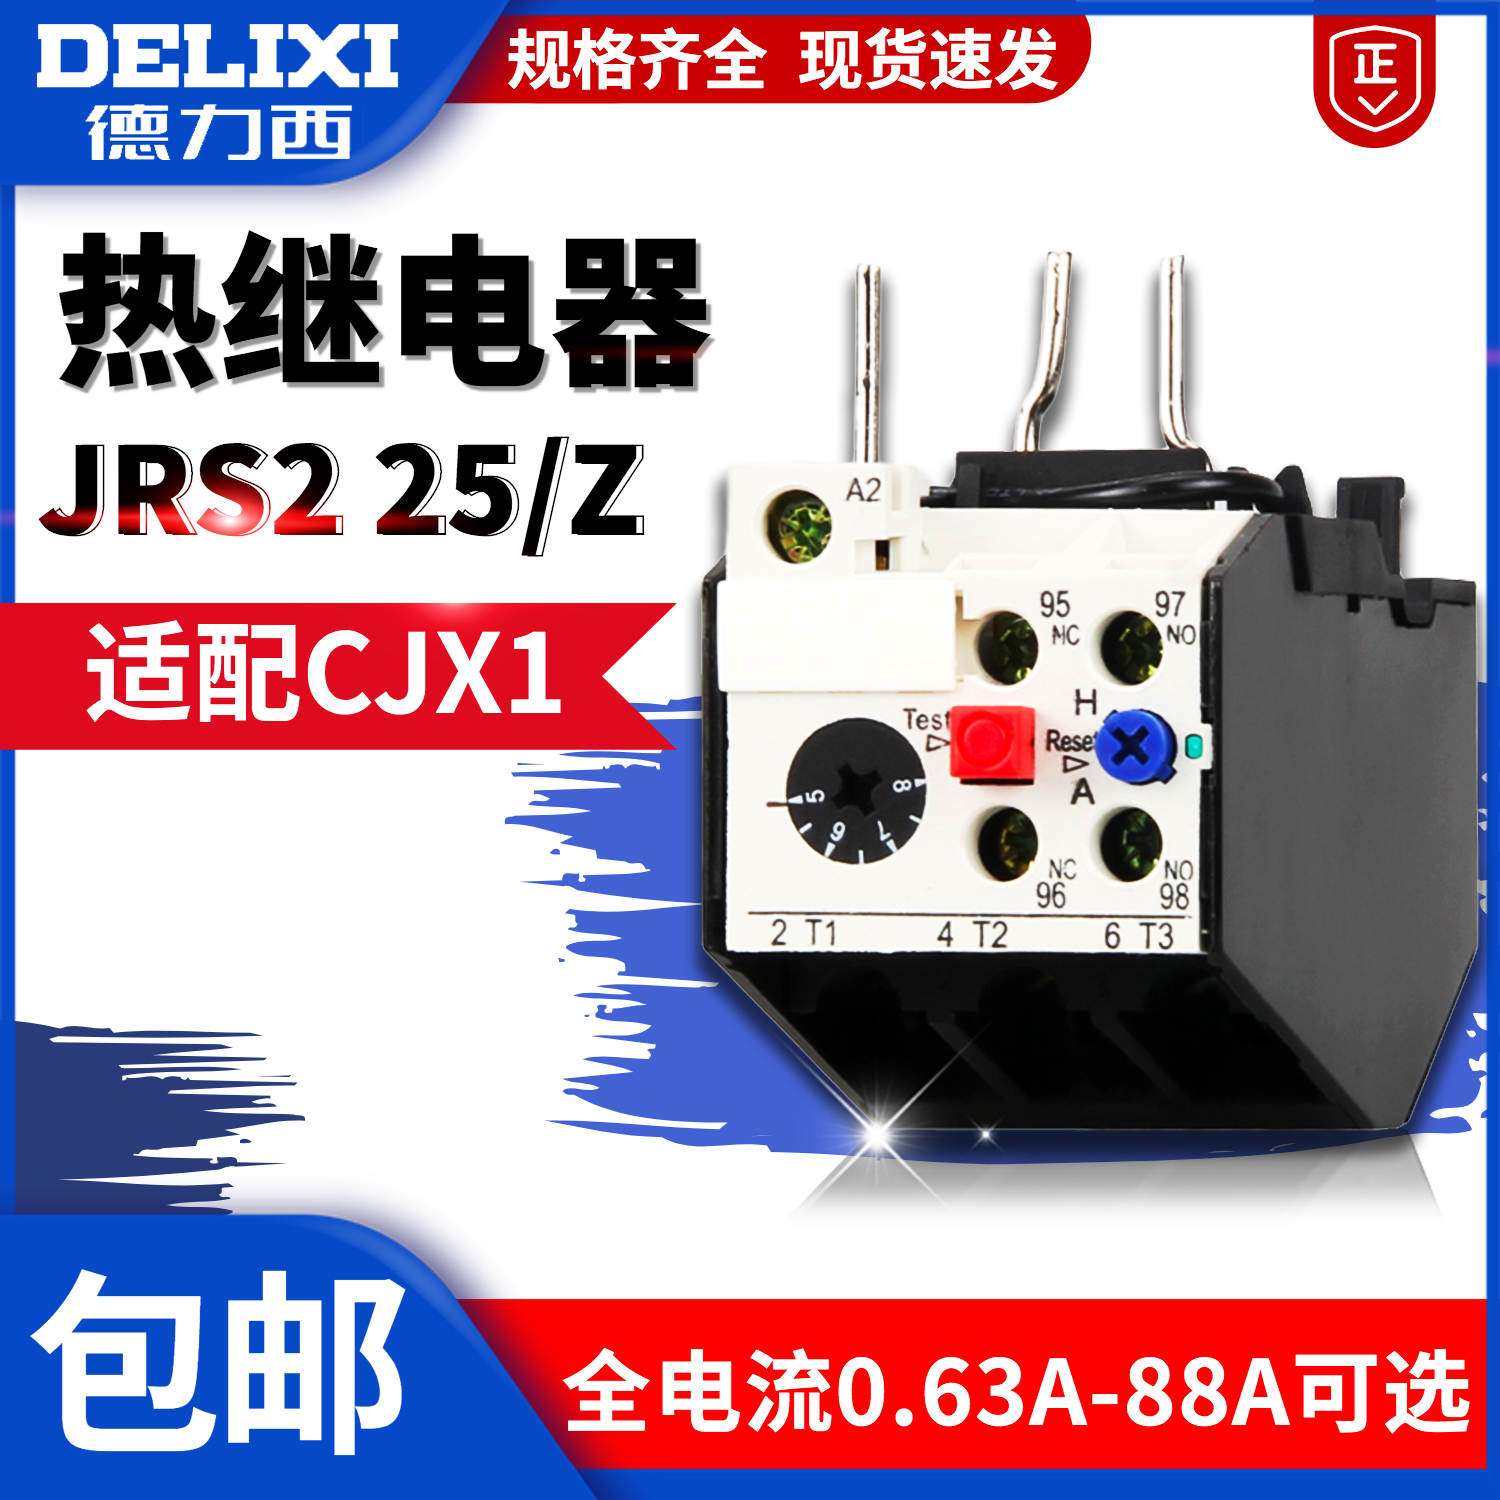 ߱ DELIXI   ȣ  JRS2-25 | CJX1- °  Z 3UA50